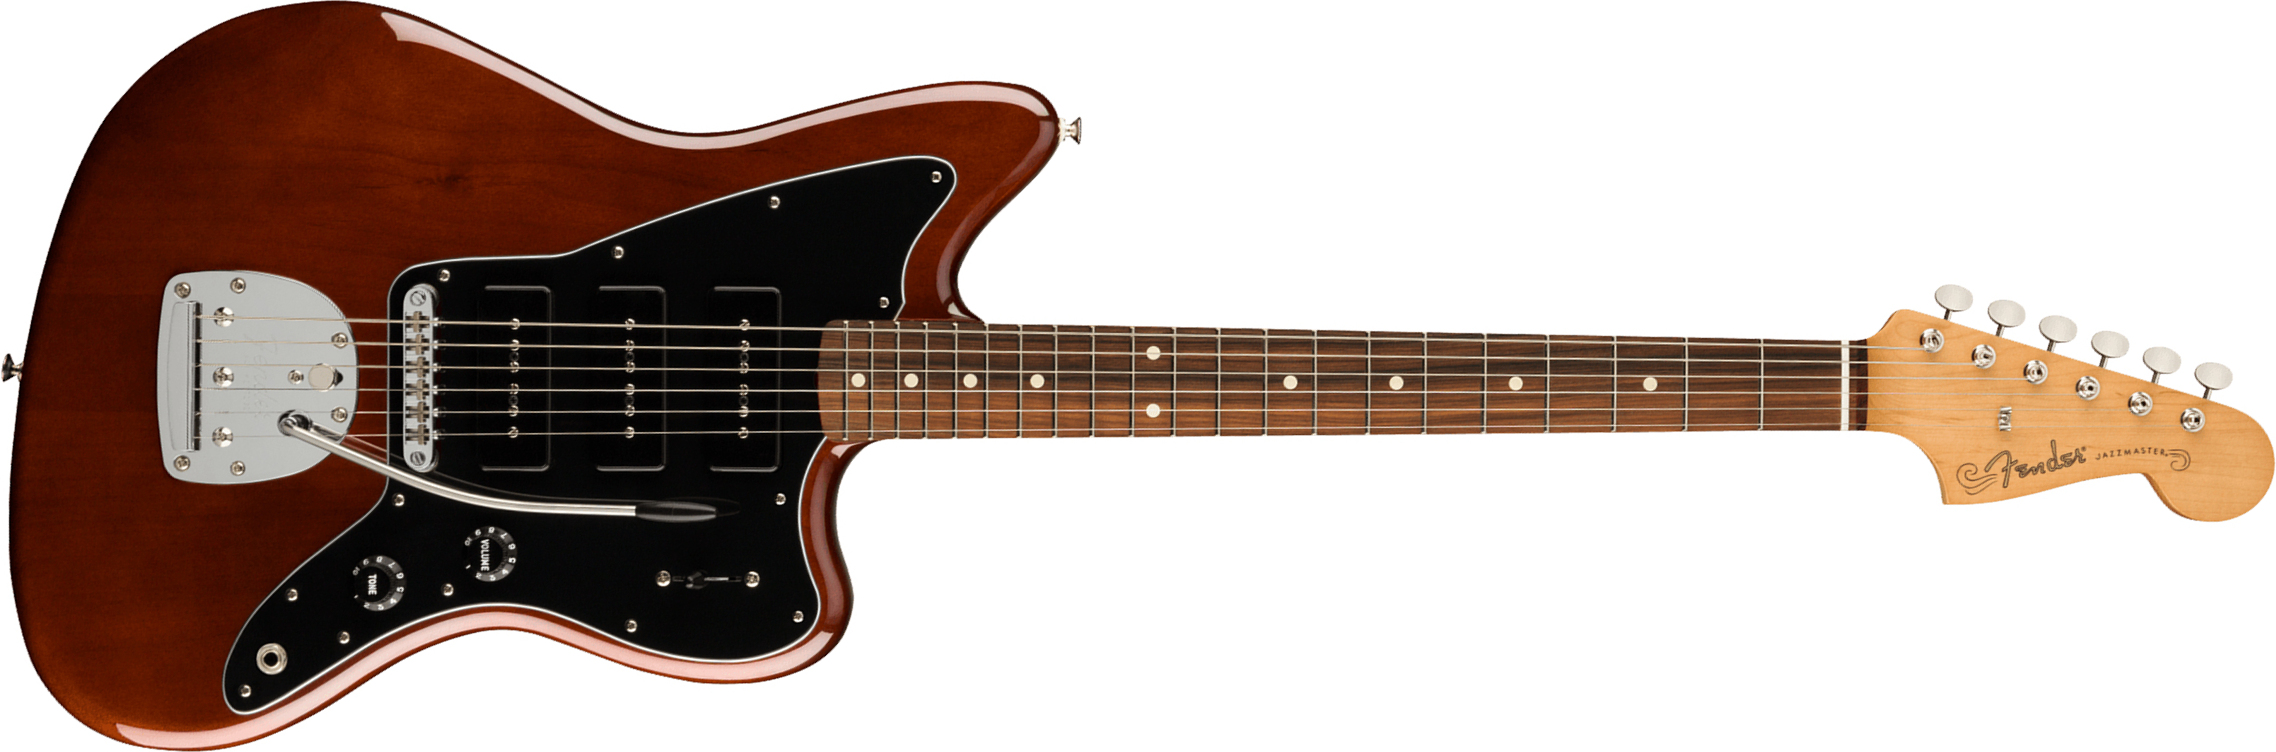 Fender Jazzmaster Noventa Mex Sss Pf +housse - Walnut - Retro rock electric guitar - Main picture